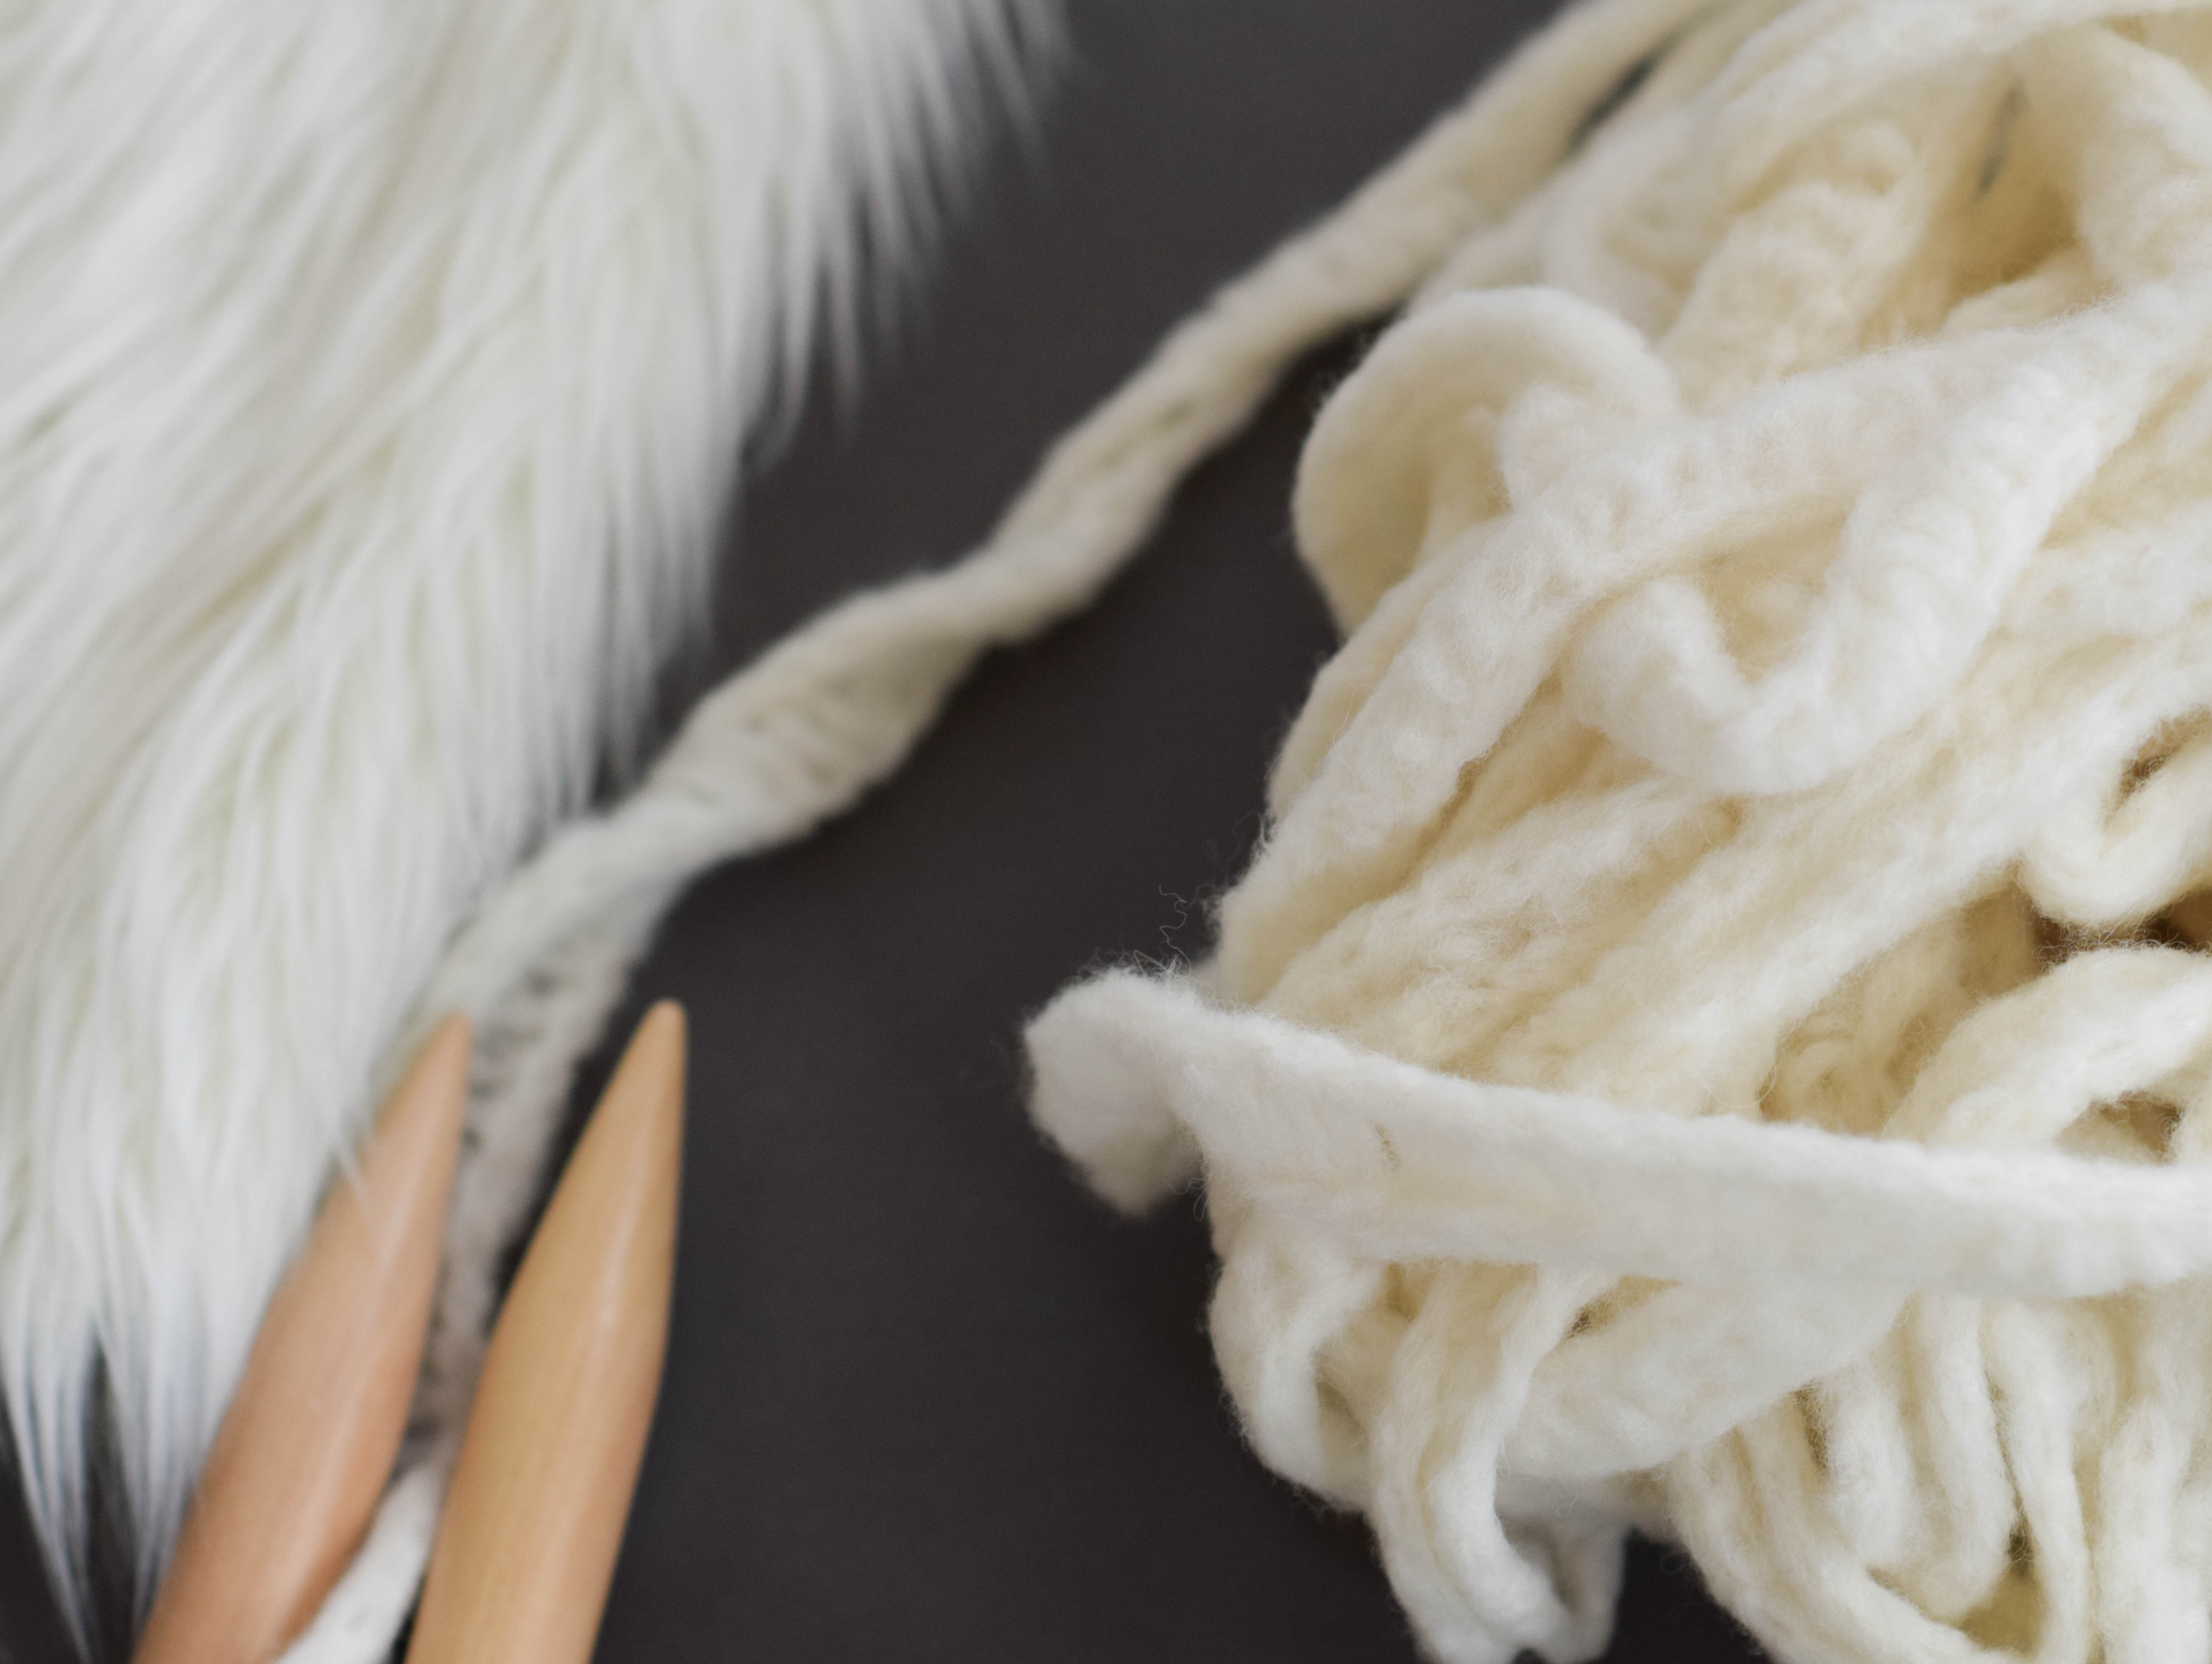 5pcs 100g 6mm Shiny Alpaca Yarn For Knitting Adult Scarf Diy